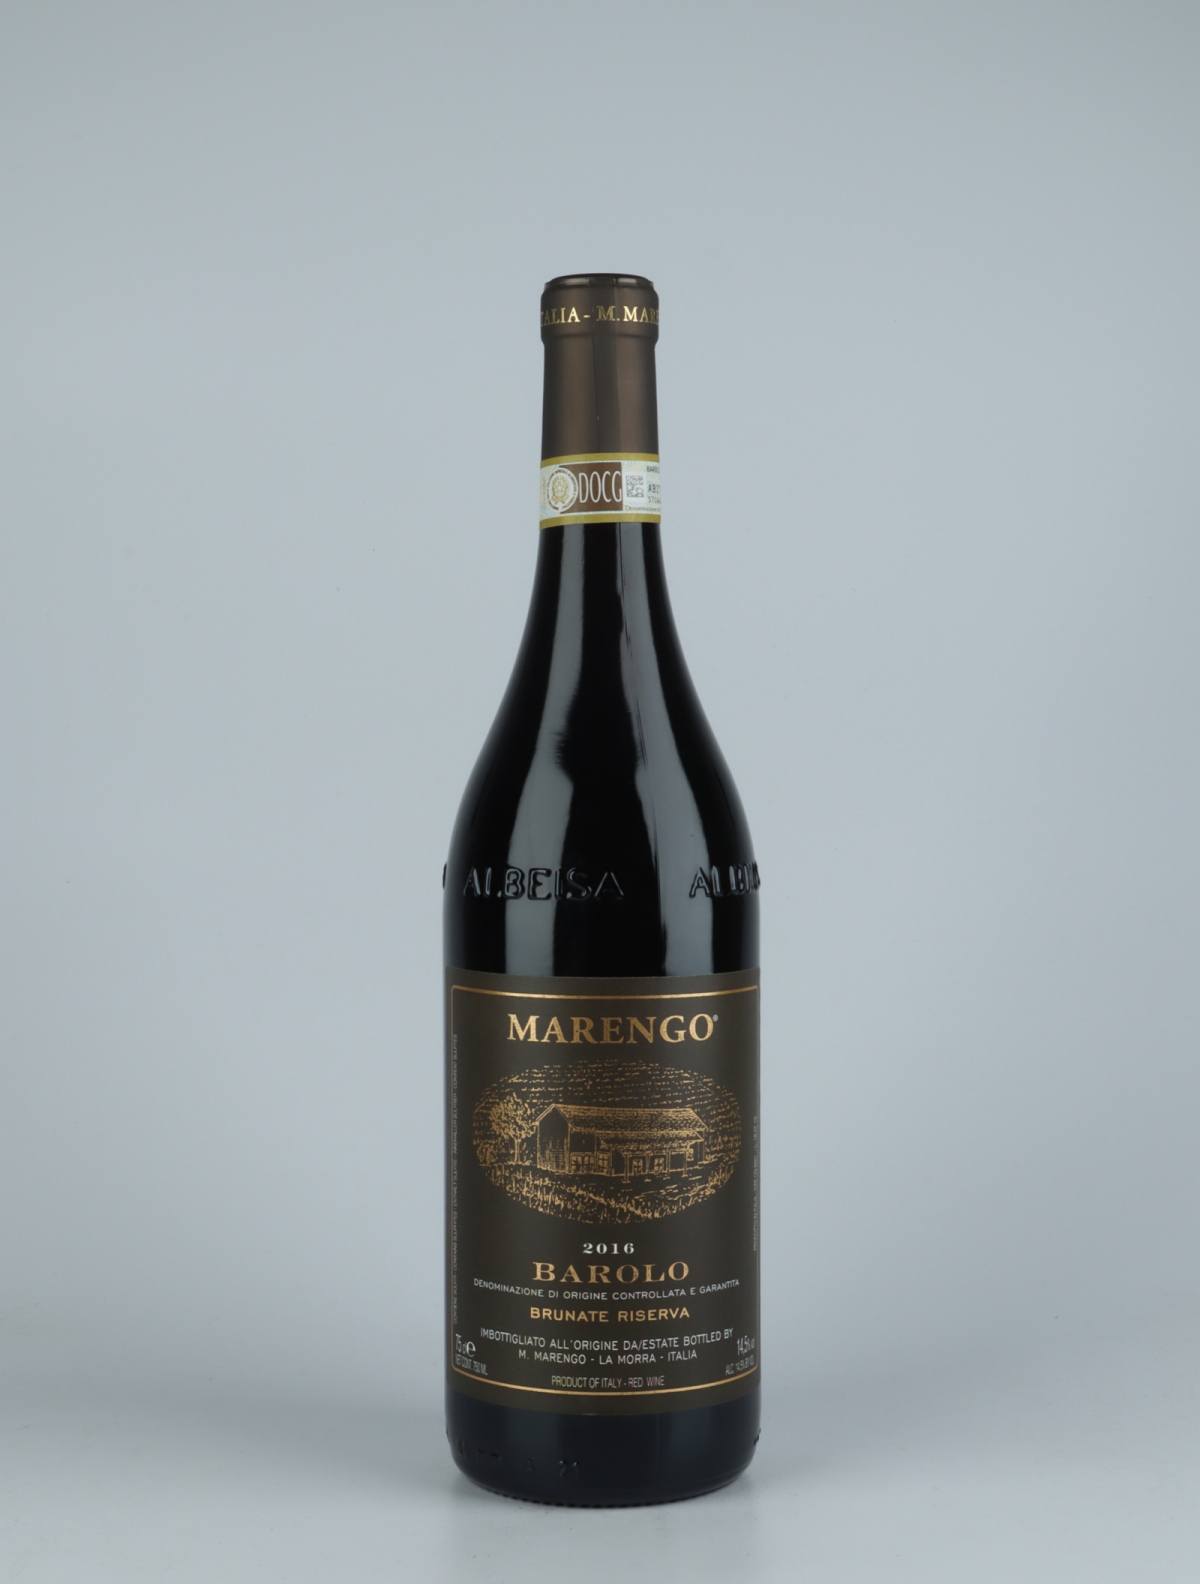 A bottle 2016 Barolo - Brunate Riserva Red wine from Mario Marengo, Piedmont in Italy